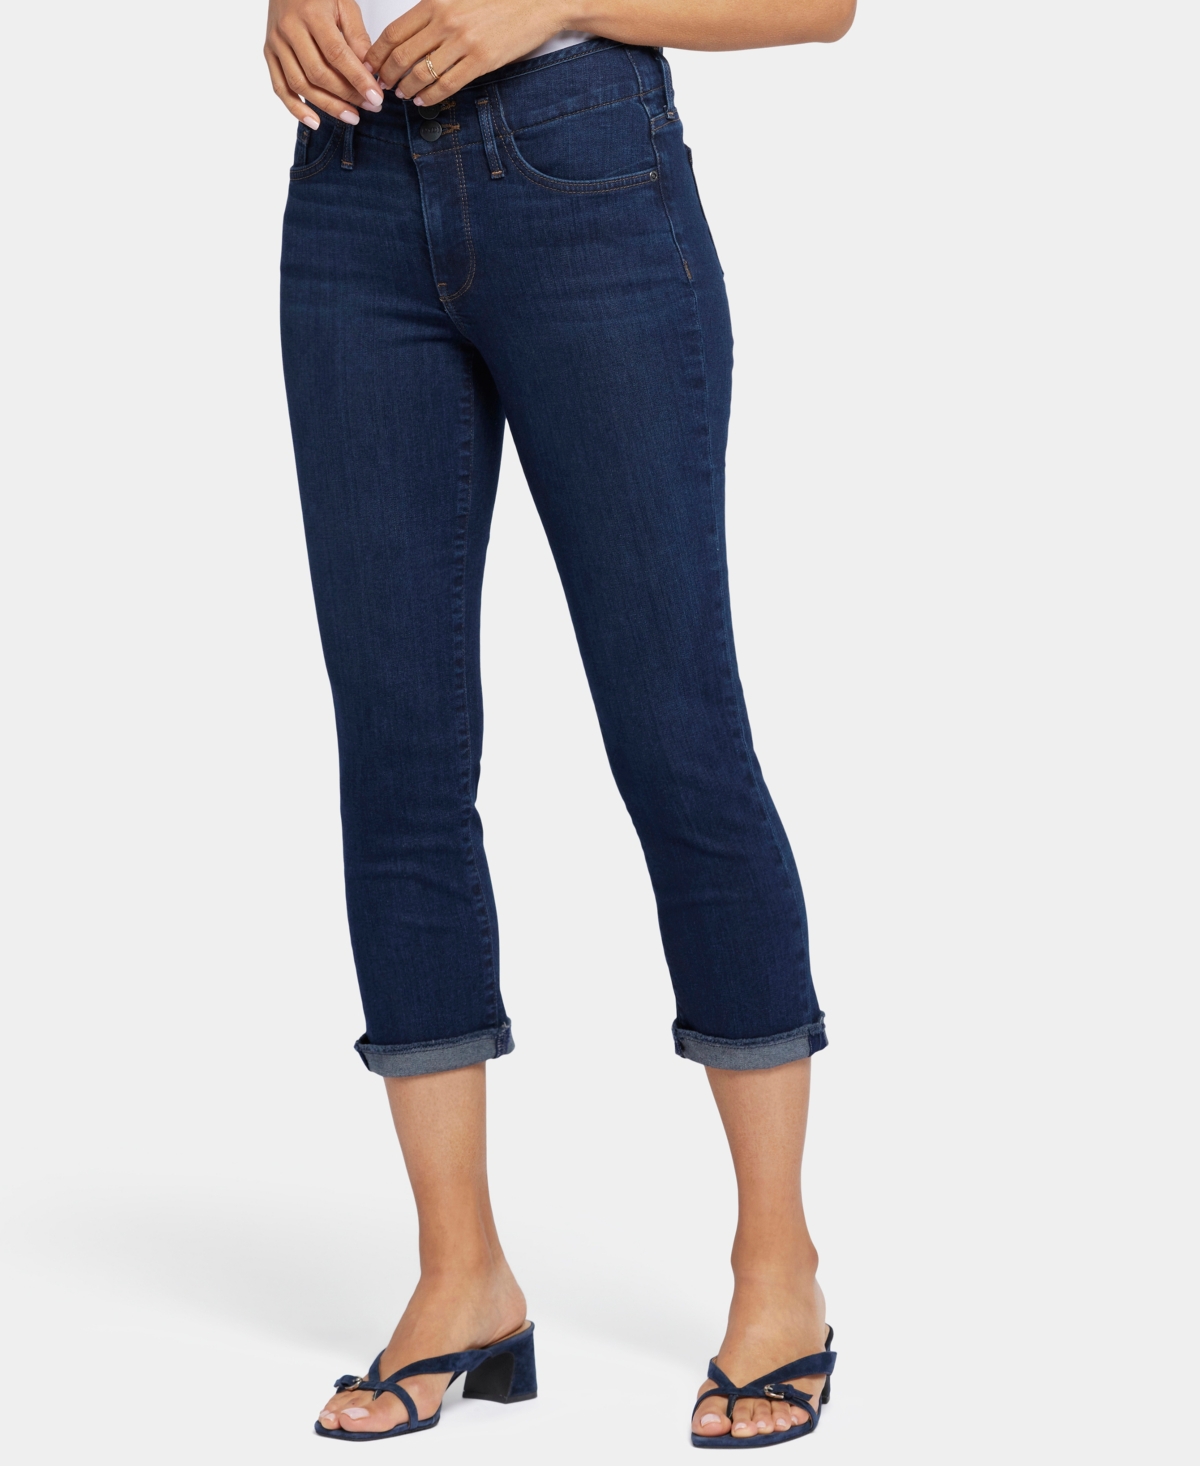 Women's Chloe Capri Jeans With Cuffs - Northbridge